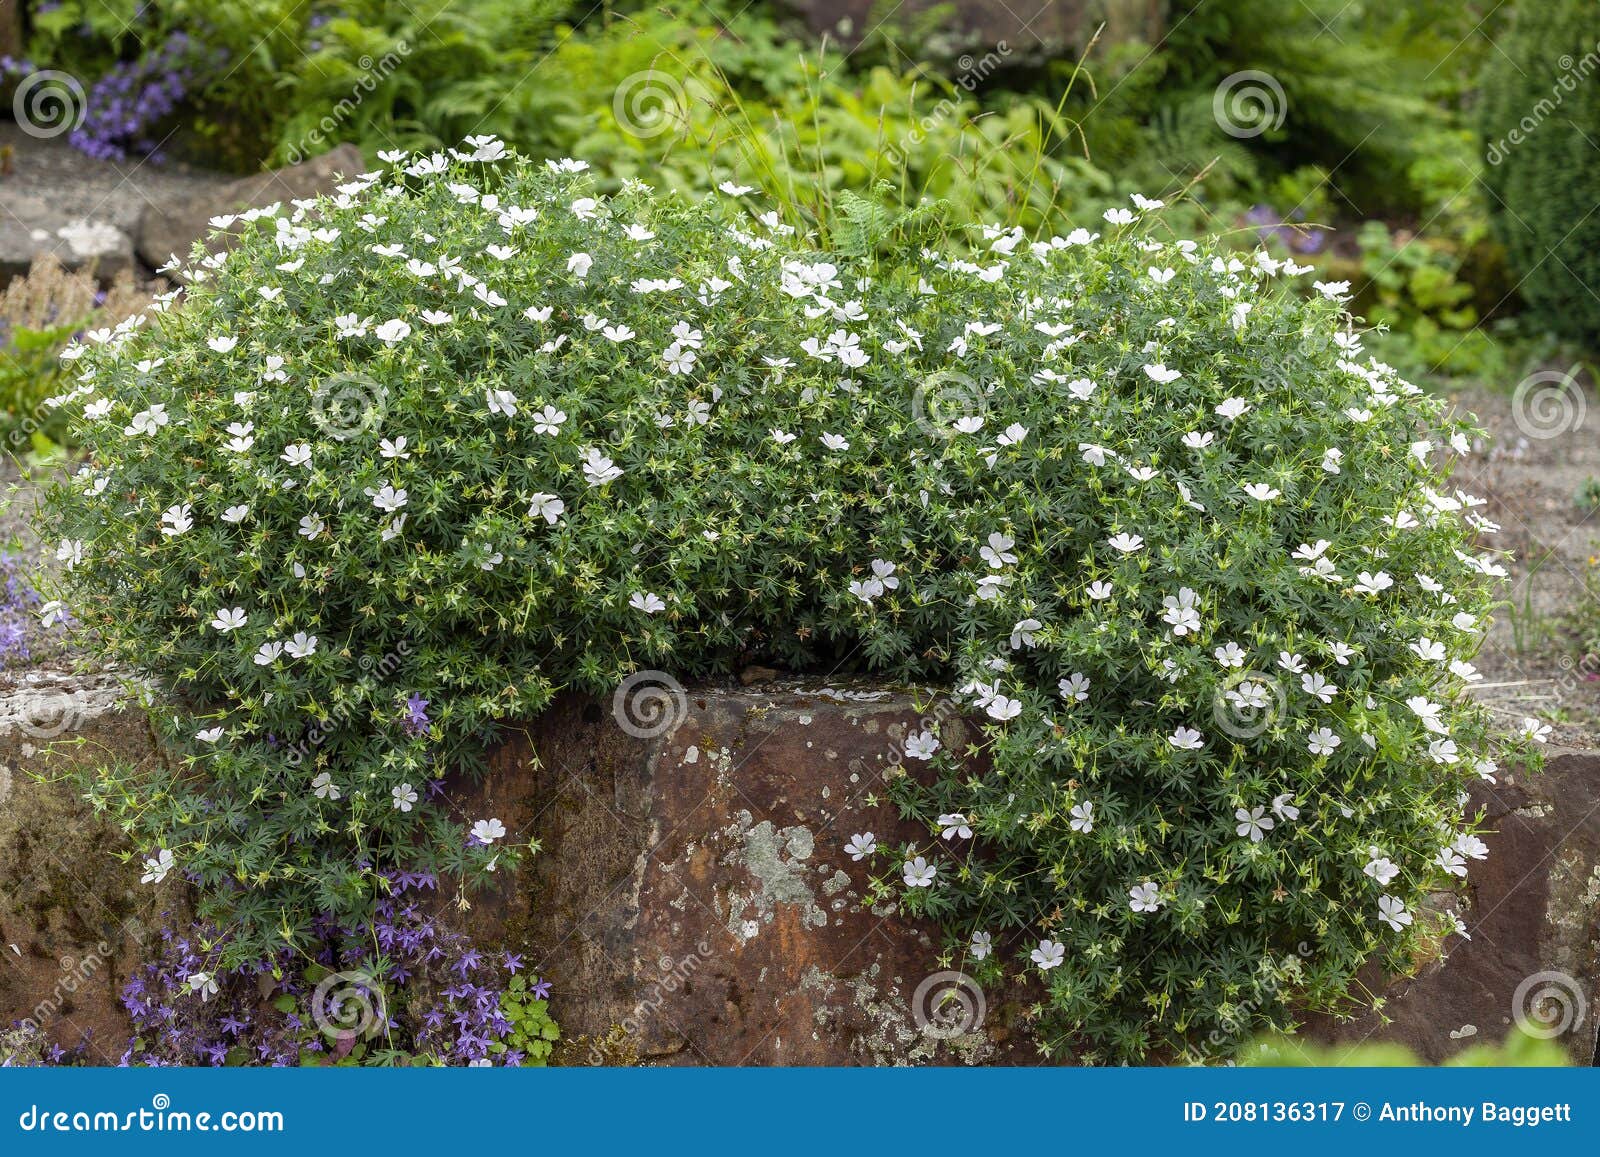 Geranium Sanguineum Stock Image Image of blooming, growing: